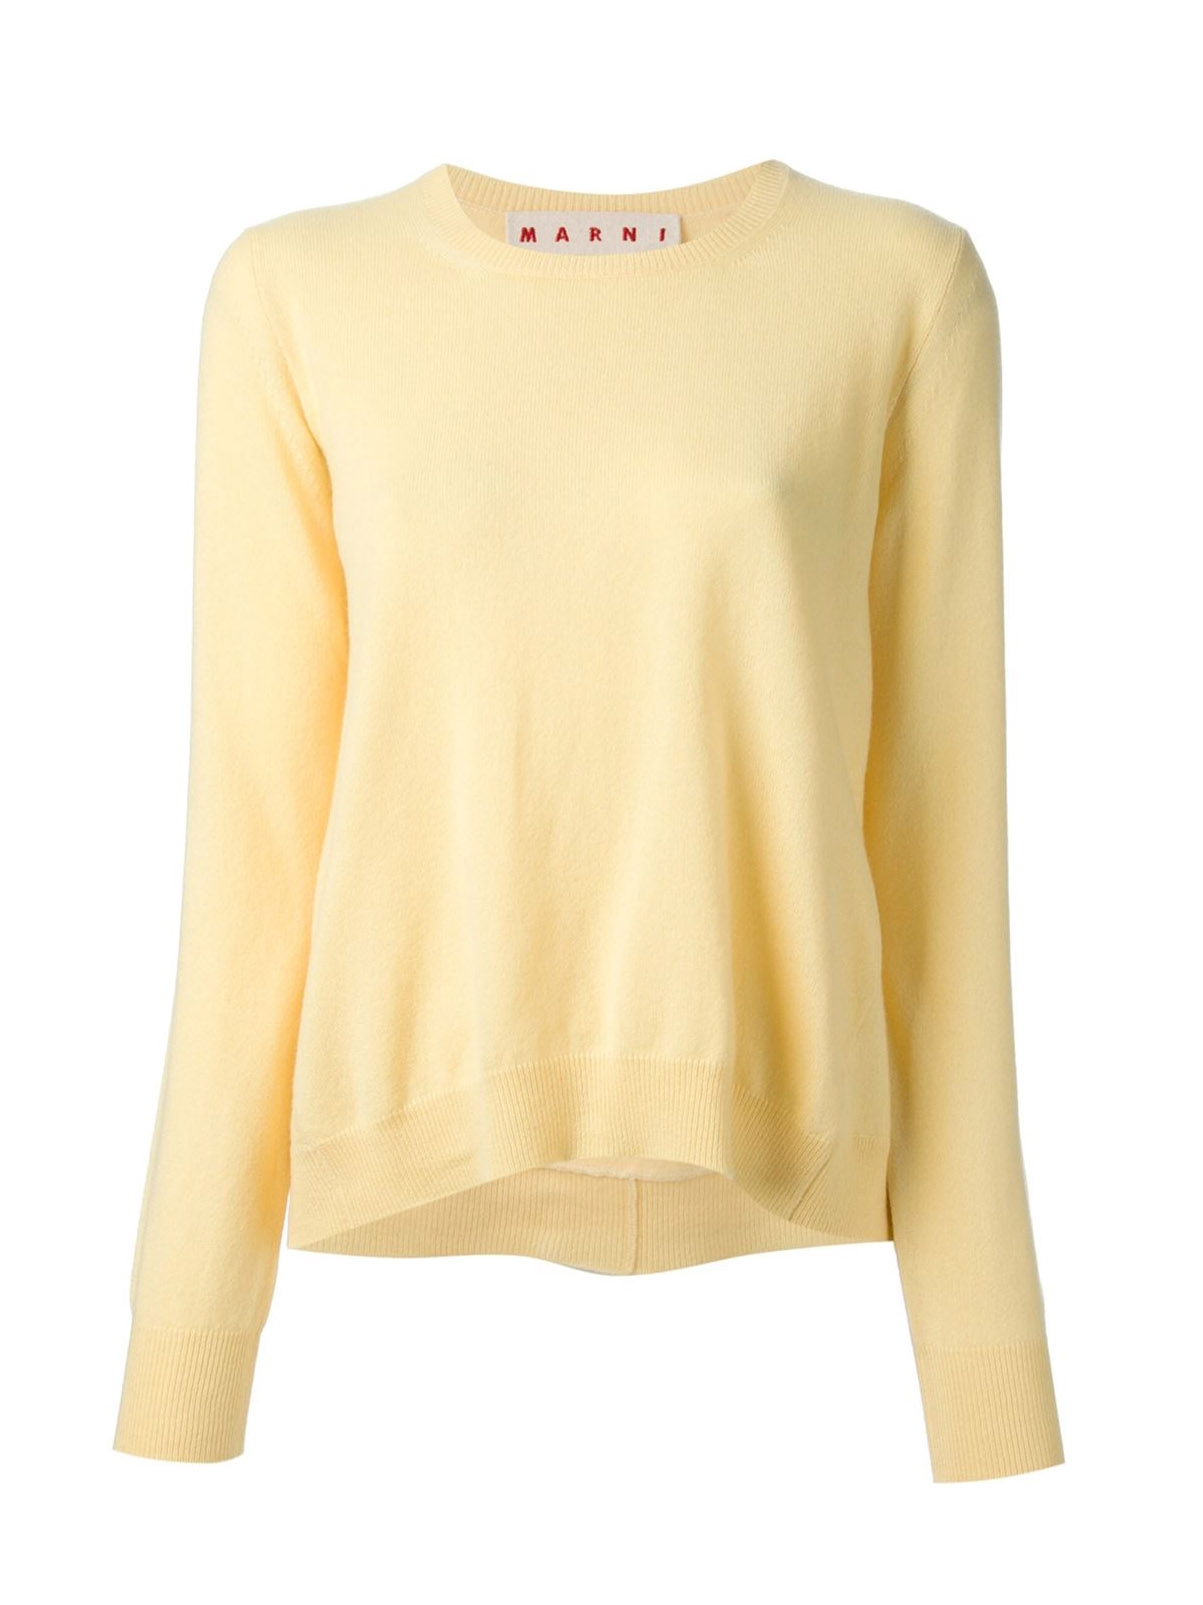 Louise Paris - MARNI Pale yellow cashmere crew neck sweater Retail ...